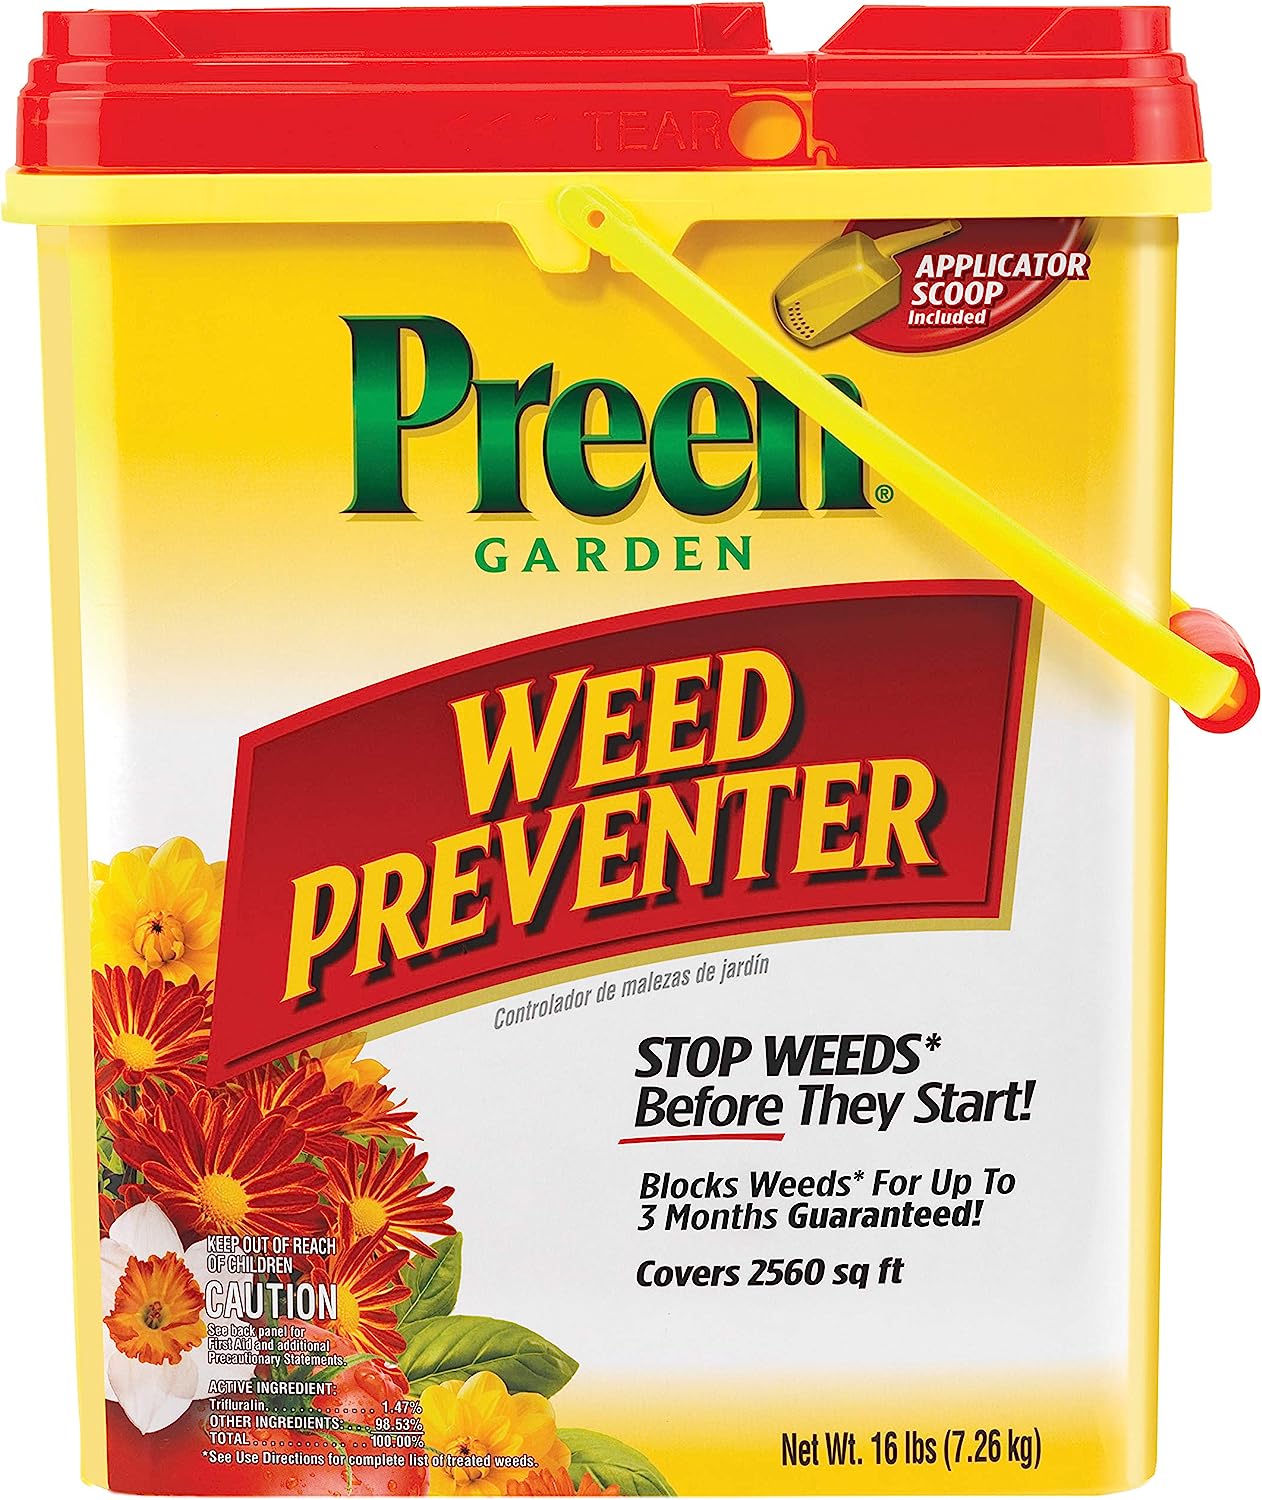 Preen Garden Weed Preventer - 16 lb. - Covers 2,560 sq. ft.